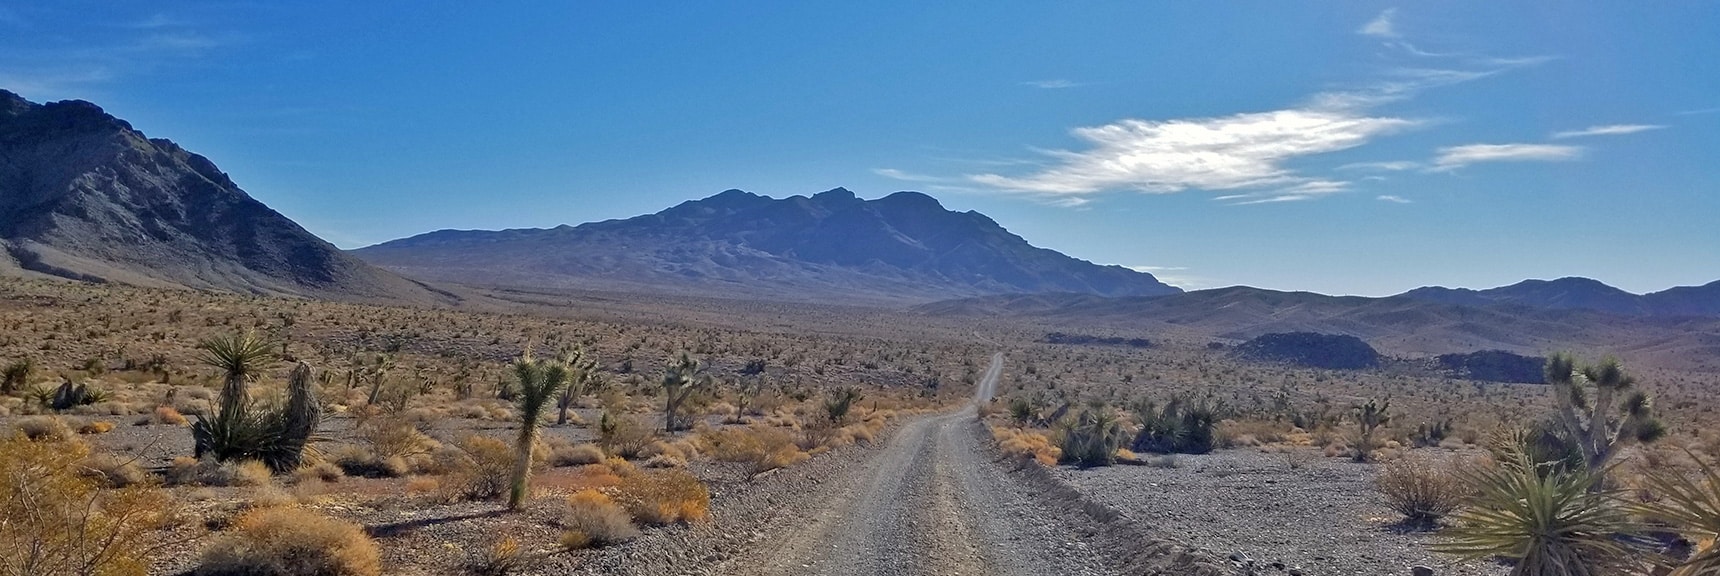 Skirting West Side of Fossil Ridge and Heading Toward Gass Peak on Gass Peak Road | Gass Peak Road Circuit | Desert National Wildlife Refuge | Nevada